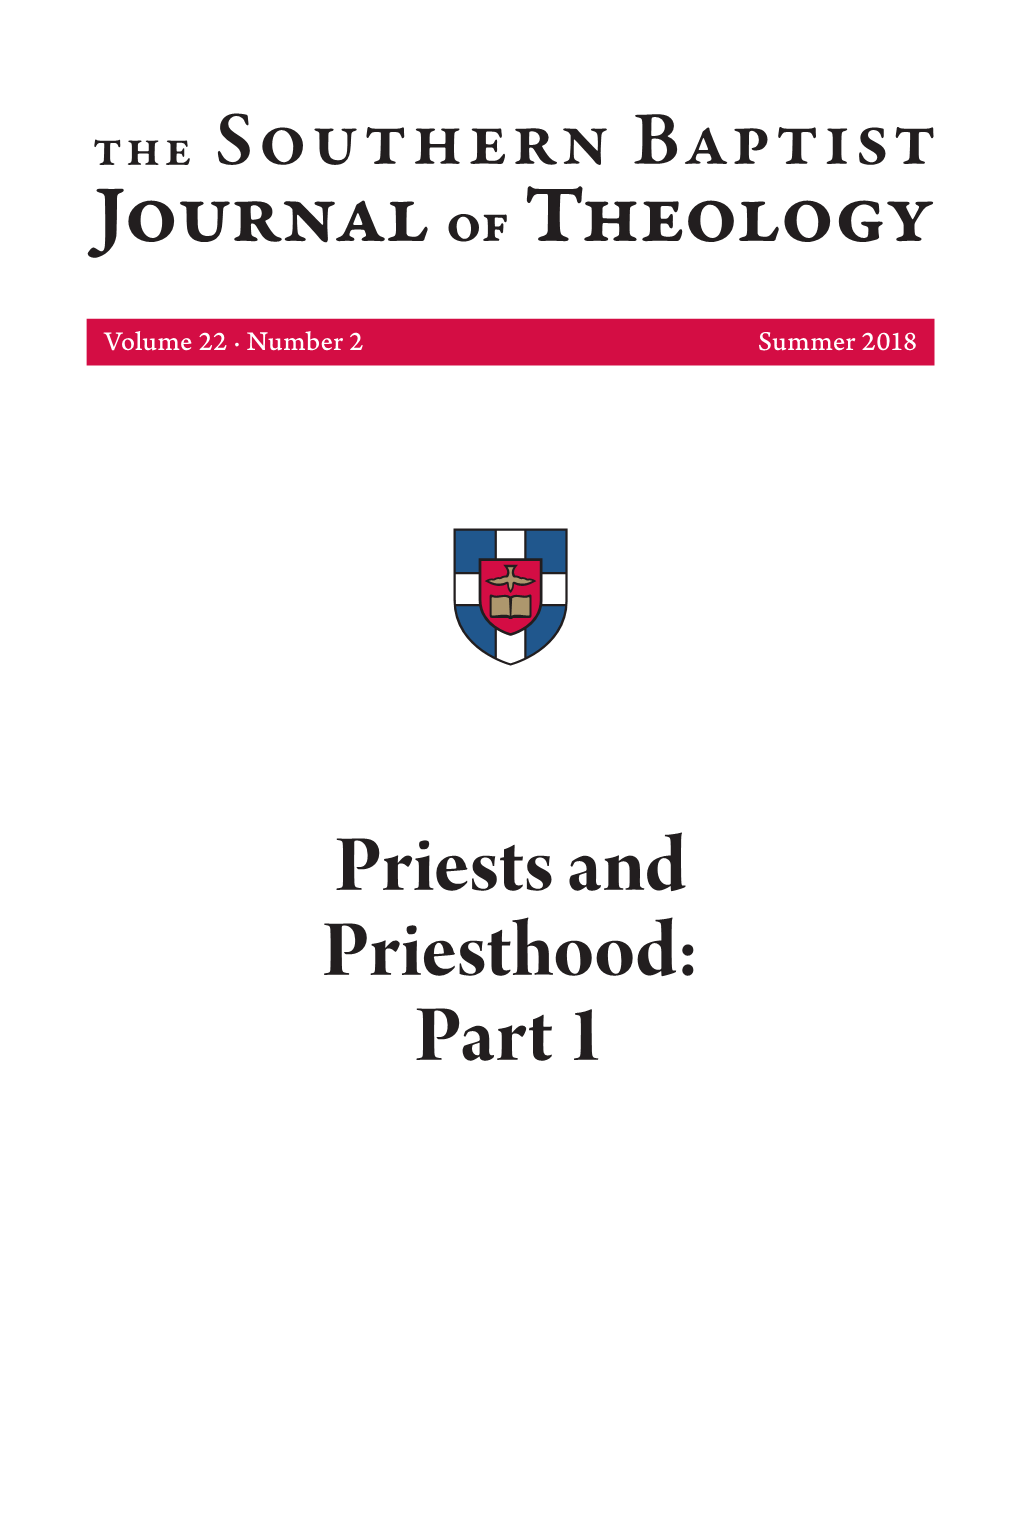 Priests and Priesthood: Part 1